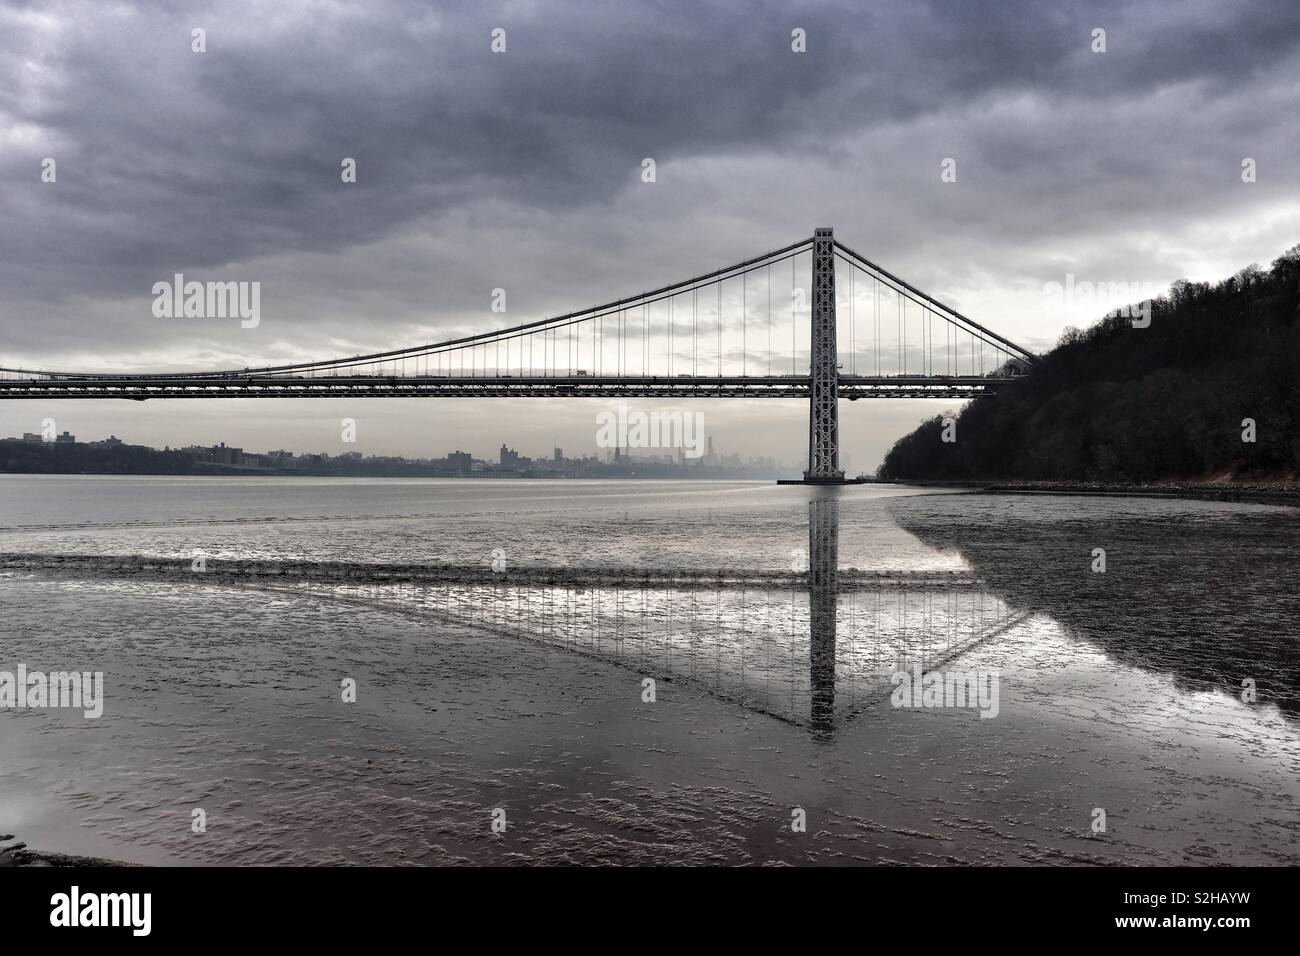 George Washington Bridge casting a reflection on an overcast day Stock Photo